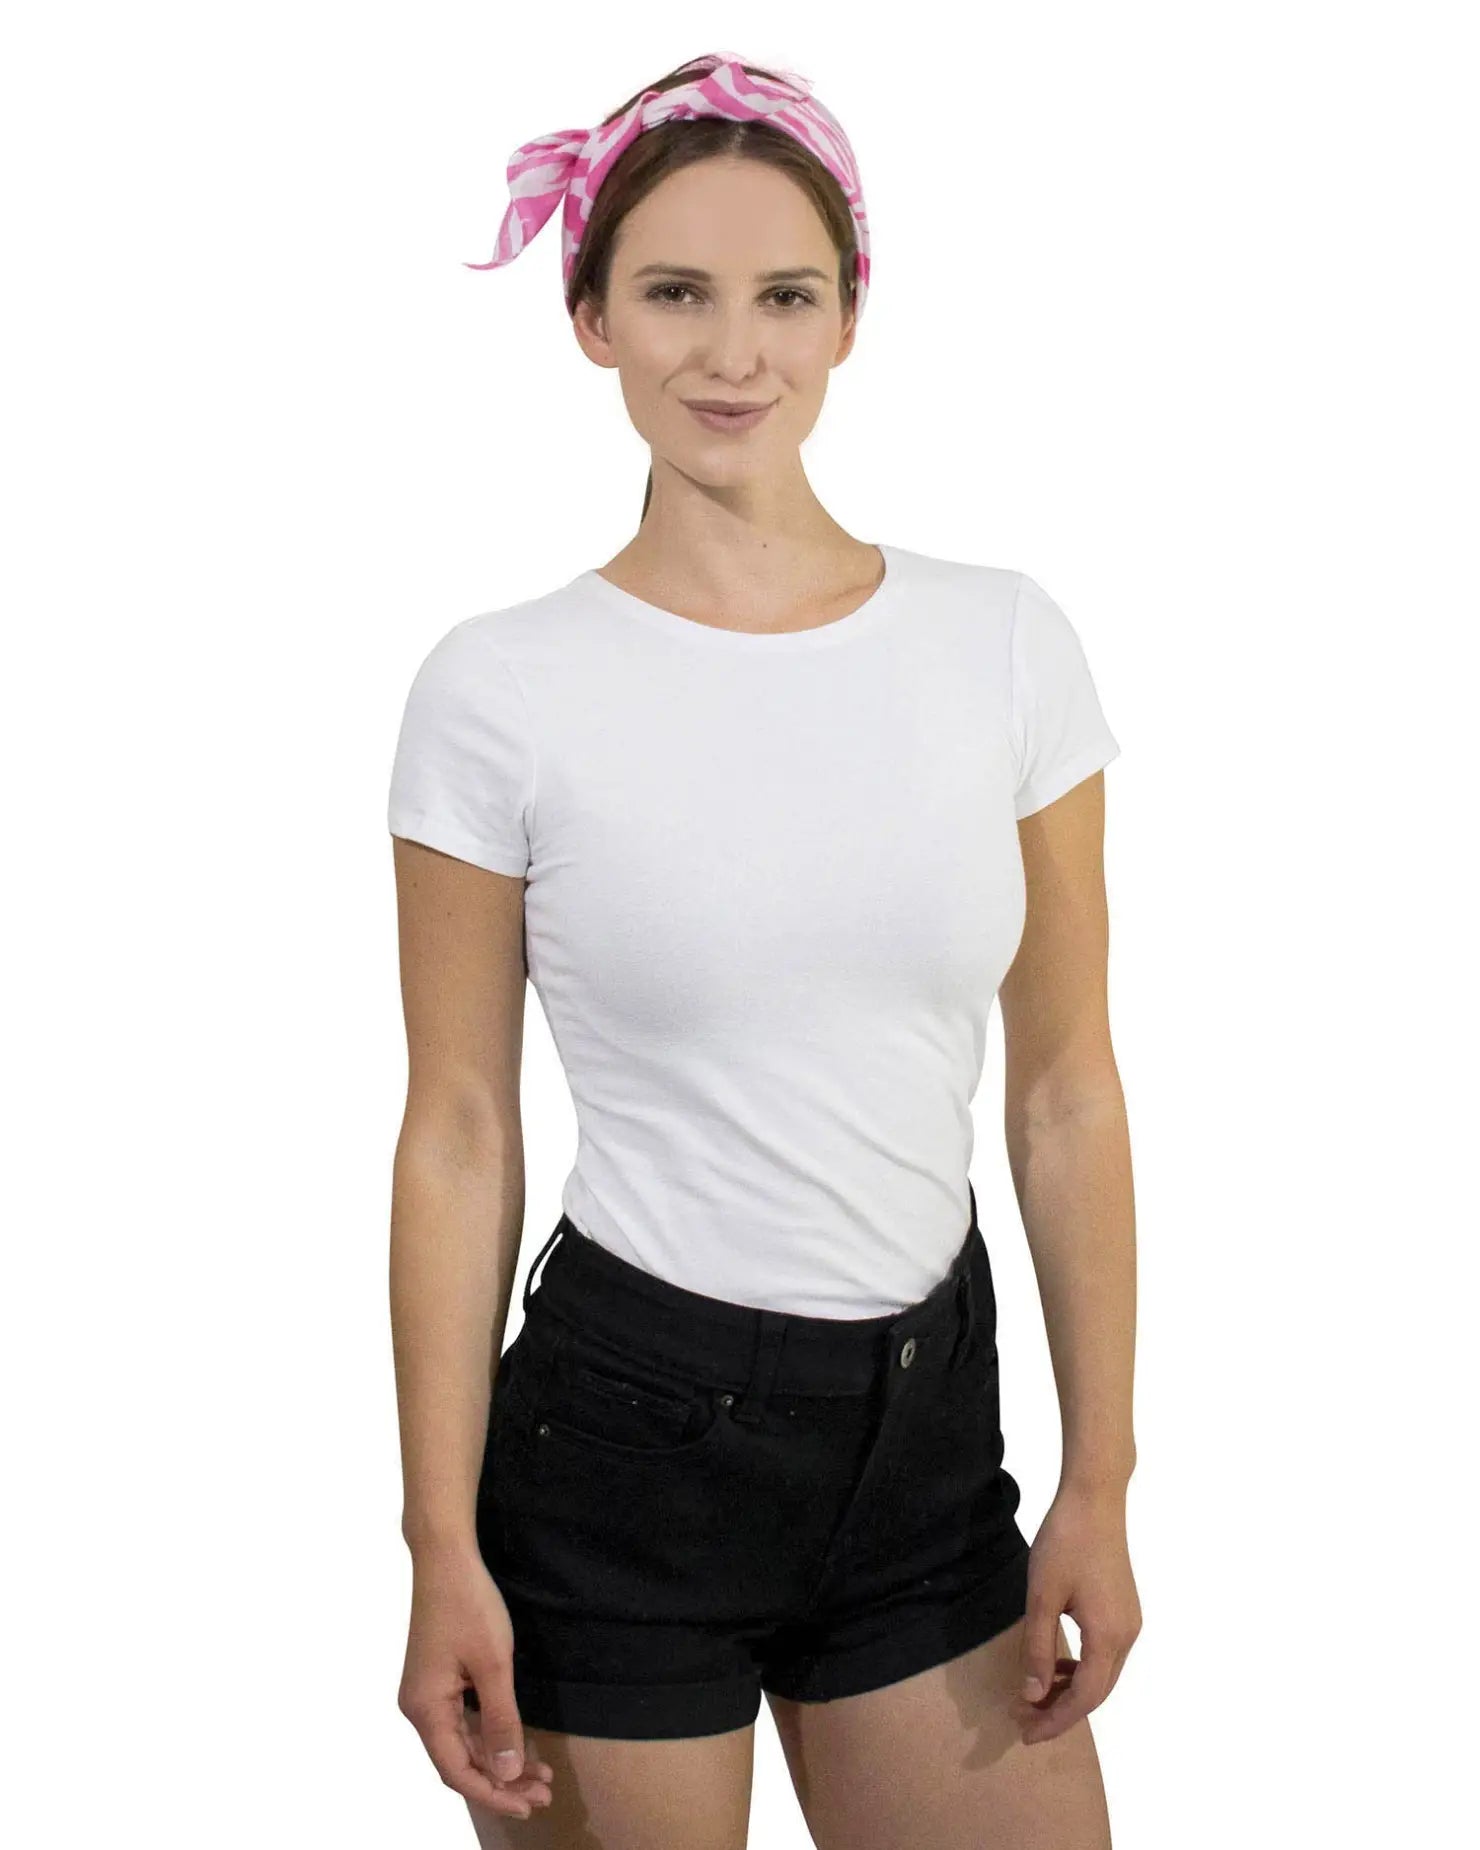 Zebra print multifunctional square bandana worn by woman in white shirt and black shorts